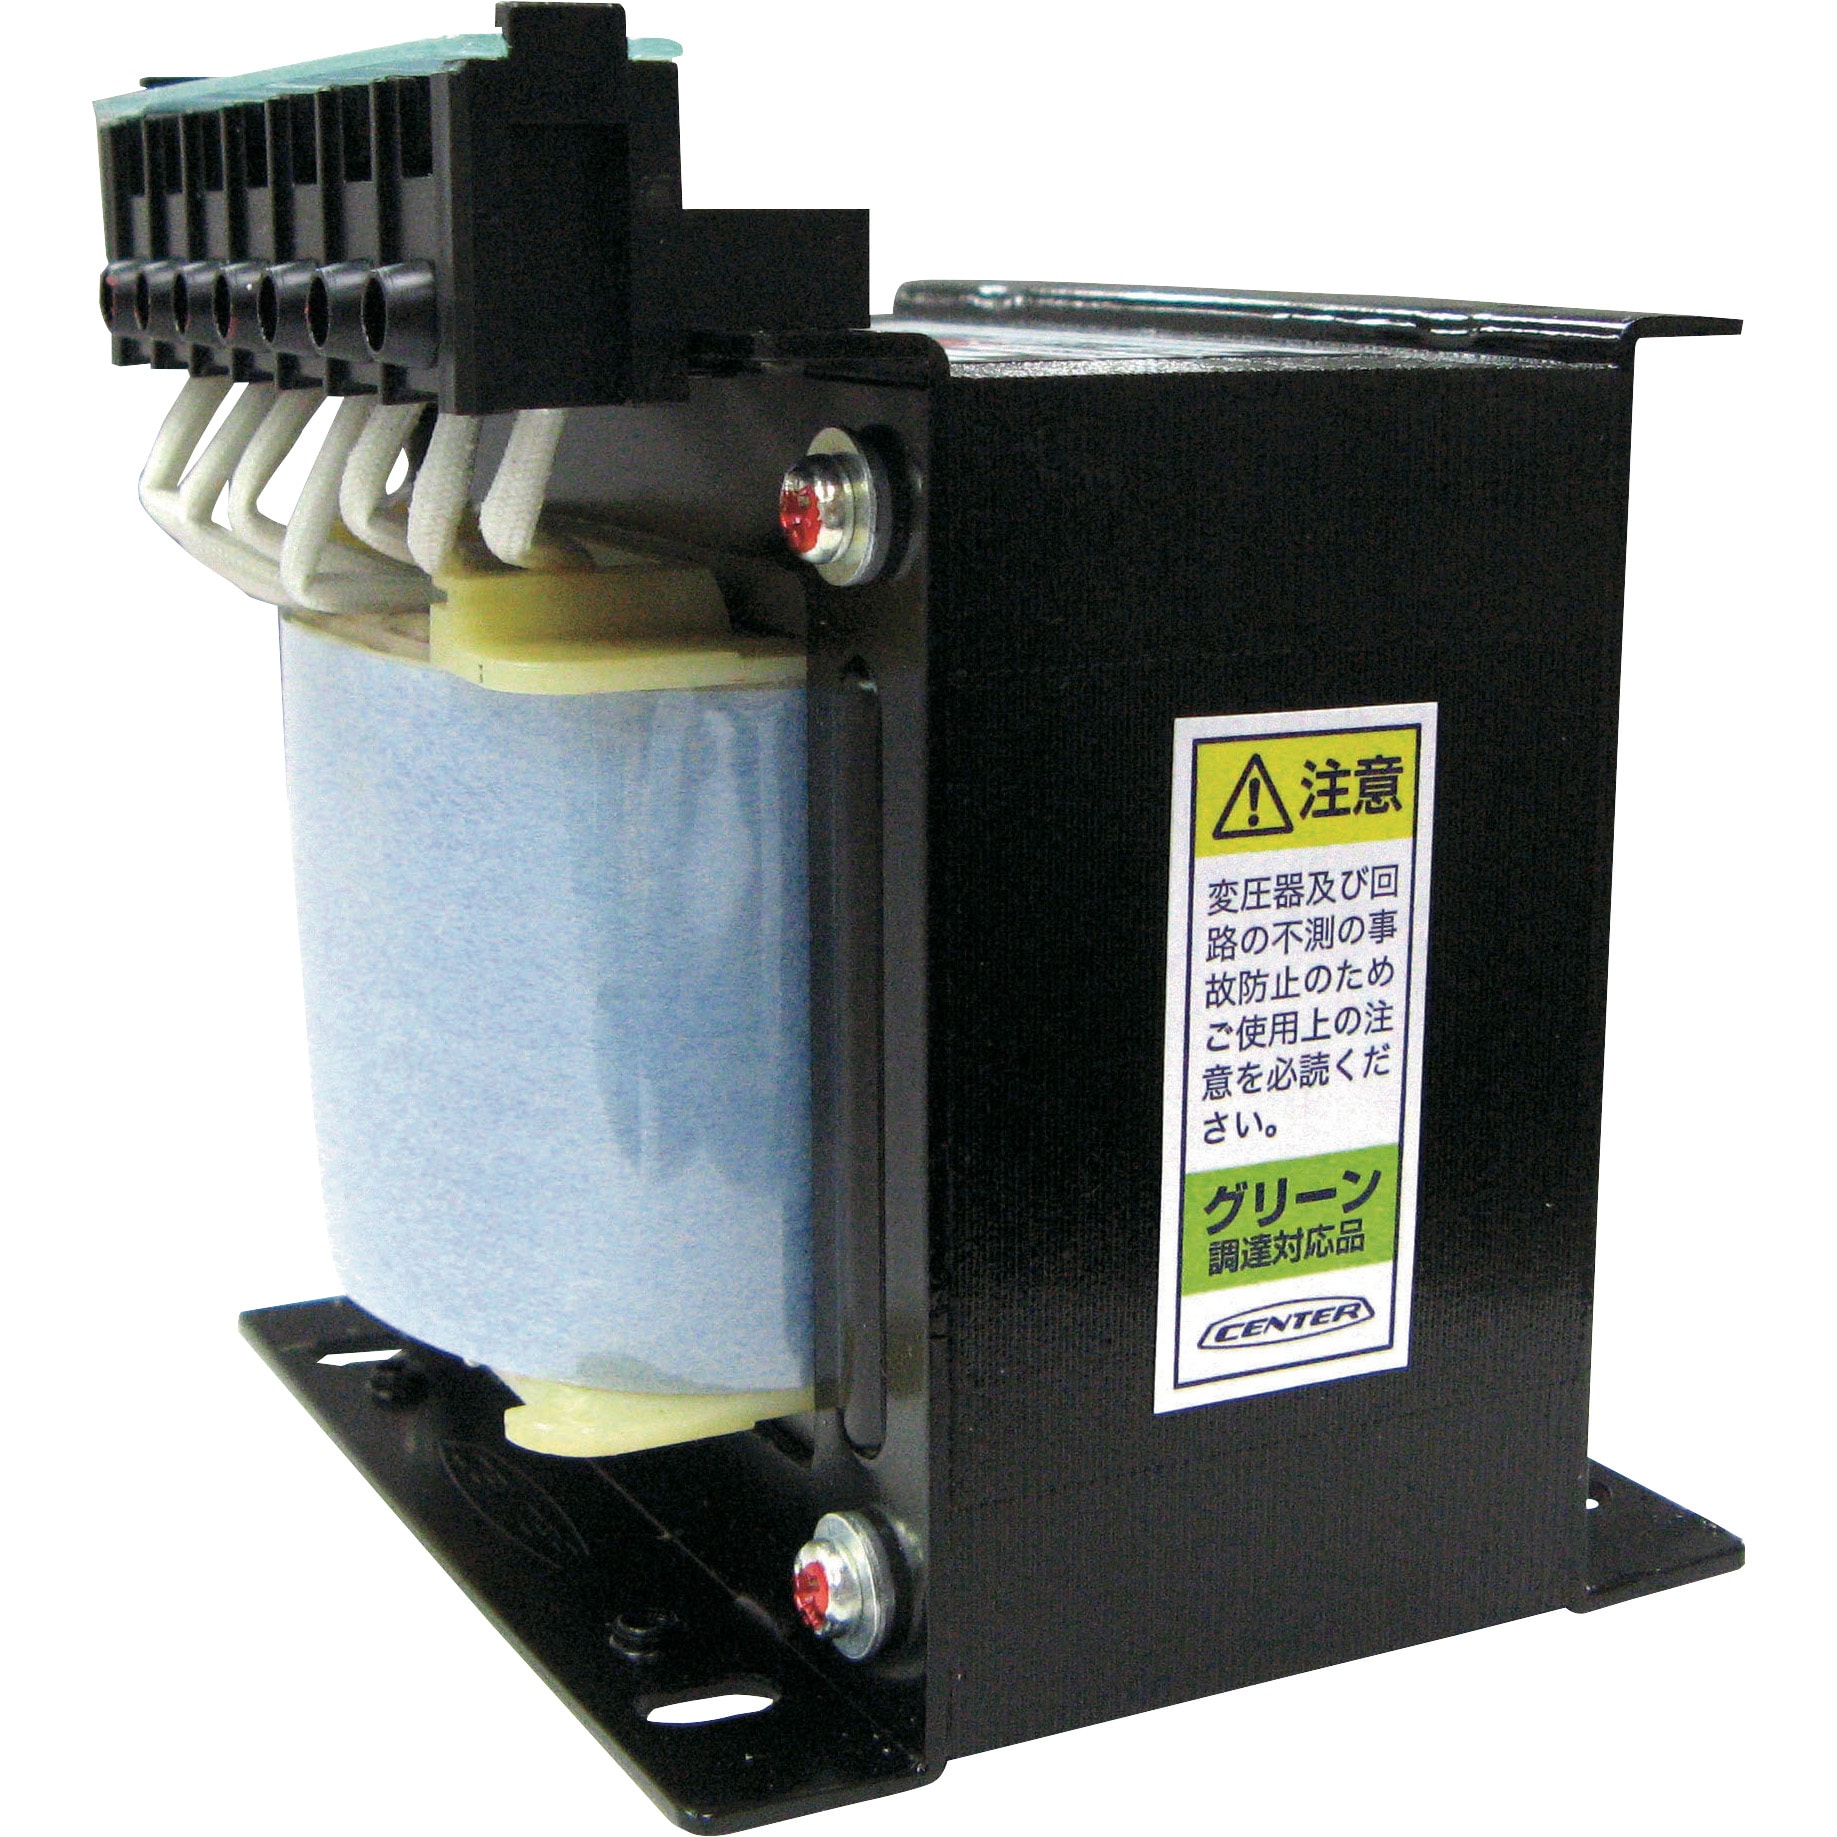 CENTER 変圧器 CLB21-1.5K - 2